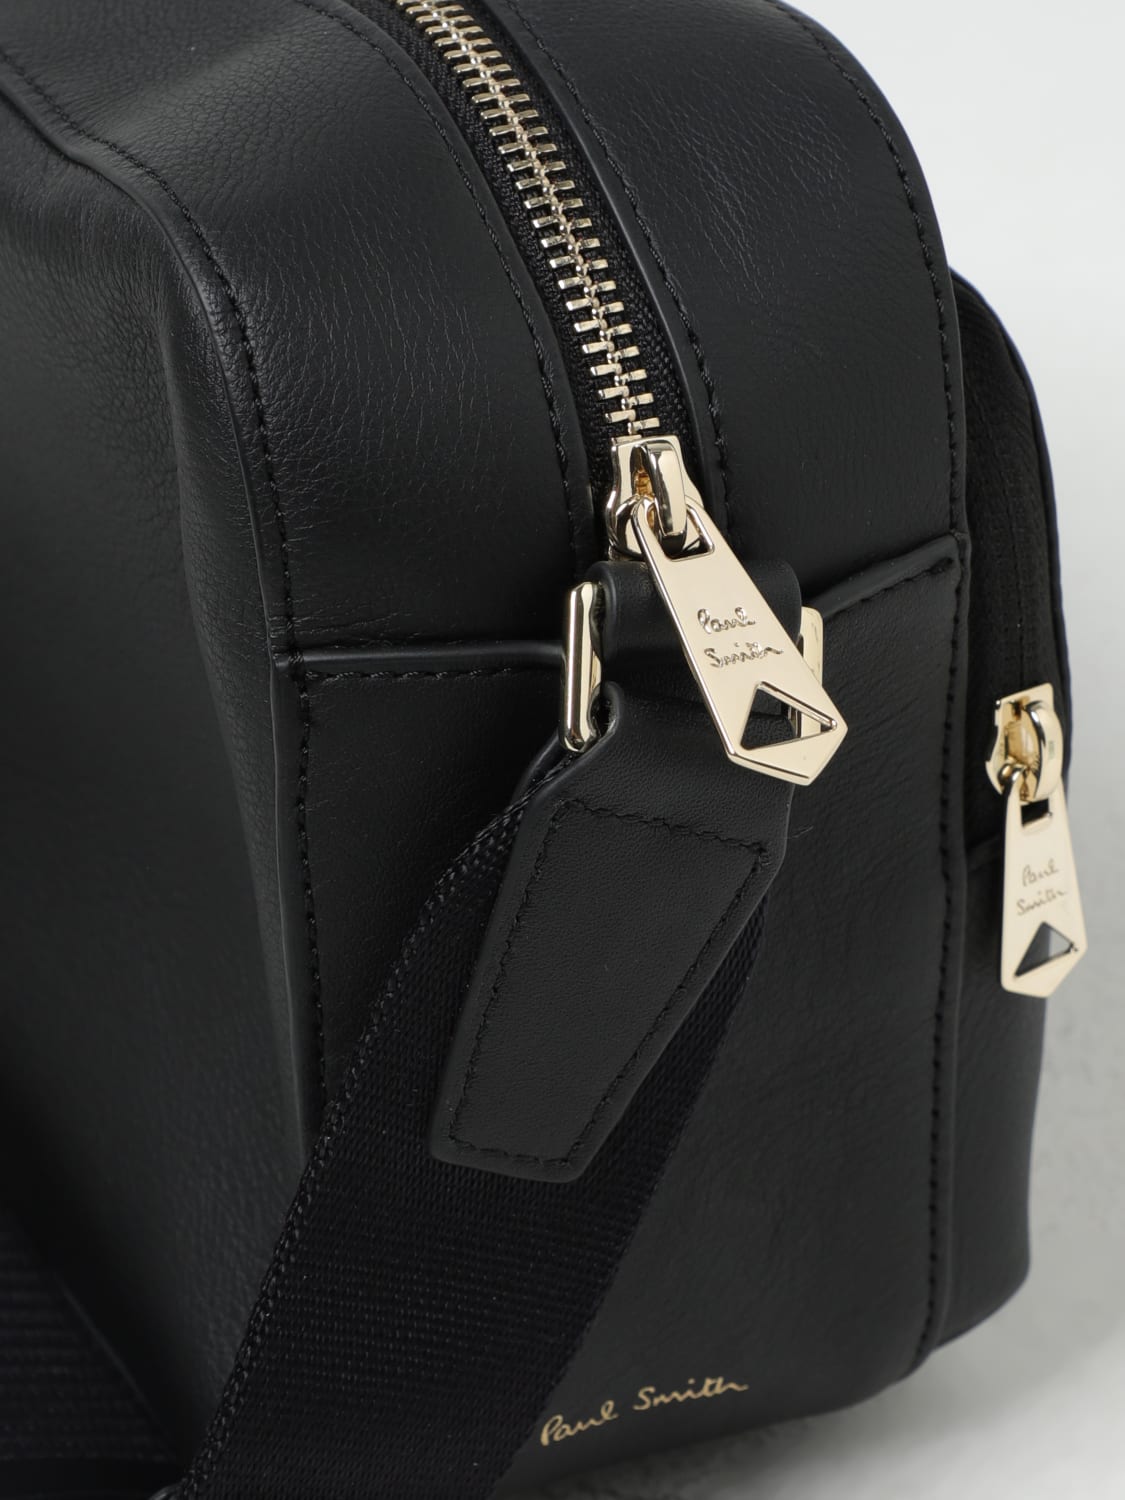 Paul Smith Women's Leather Shoulder Bag